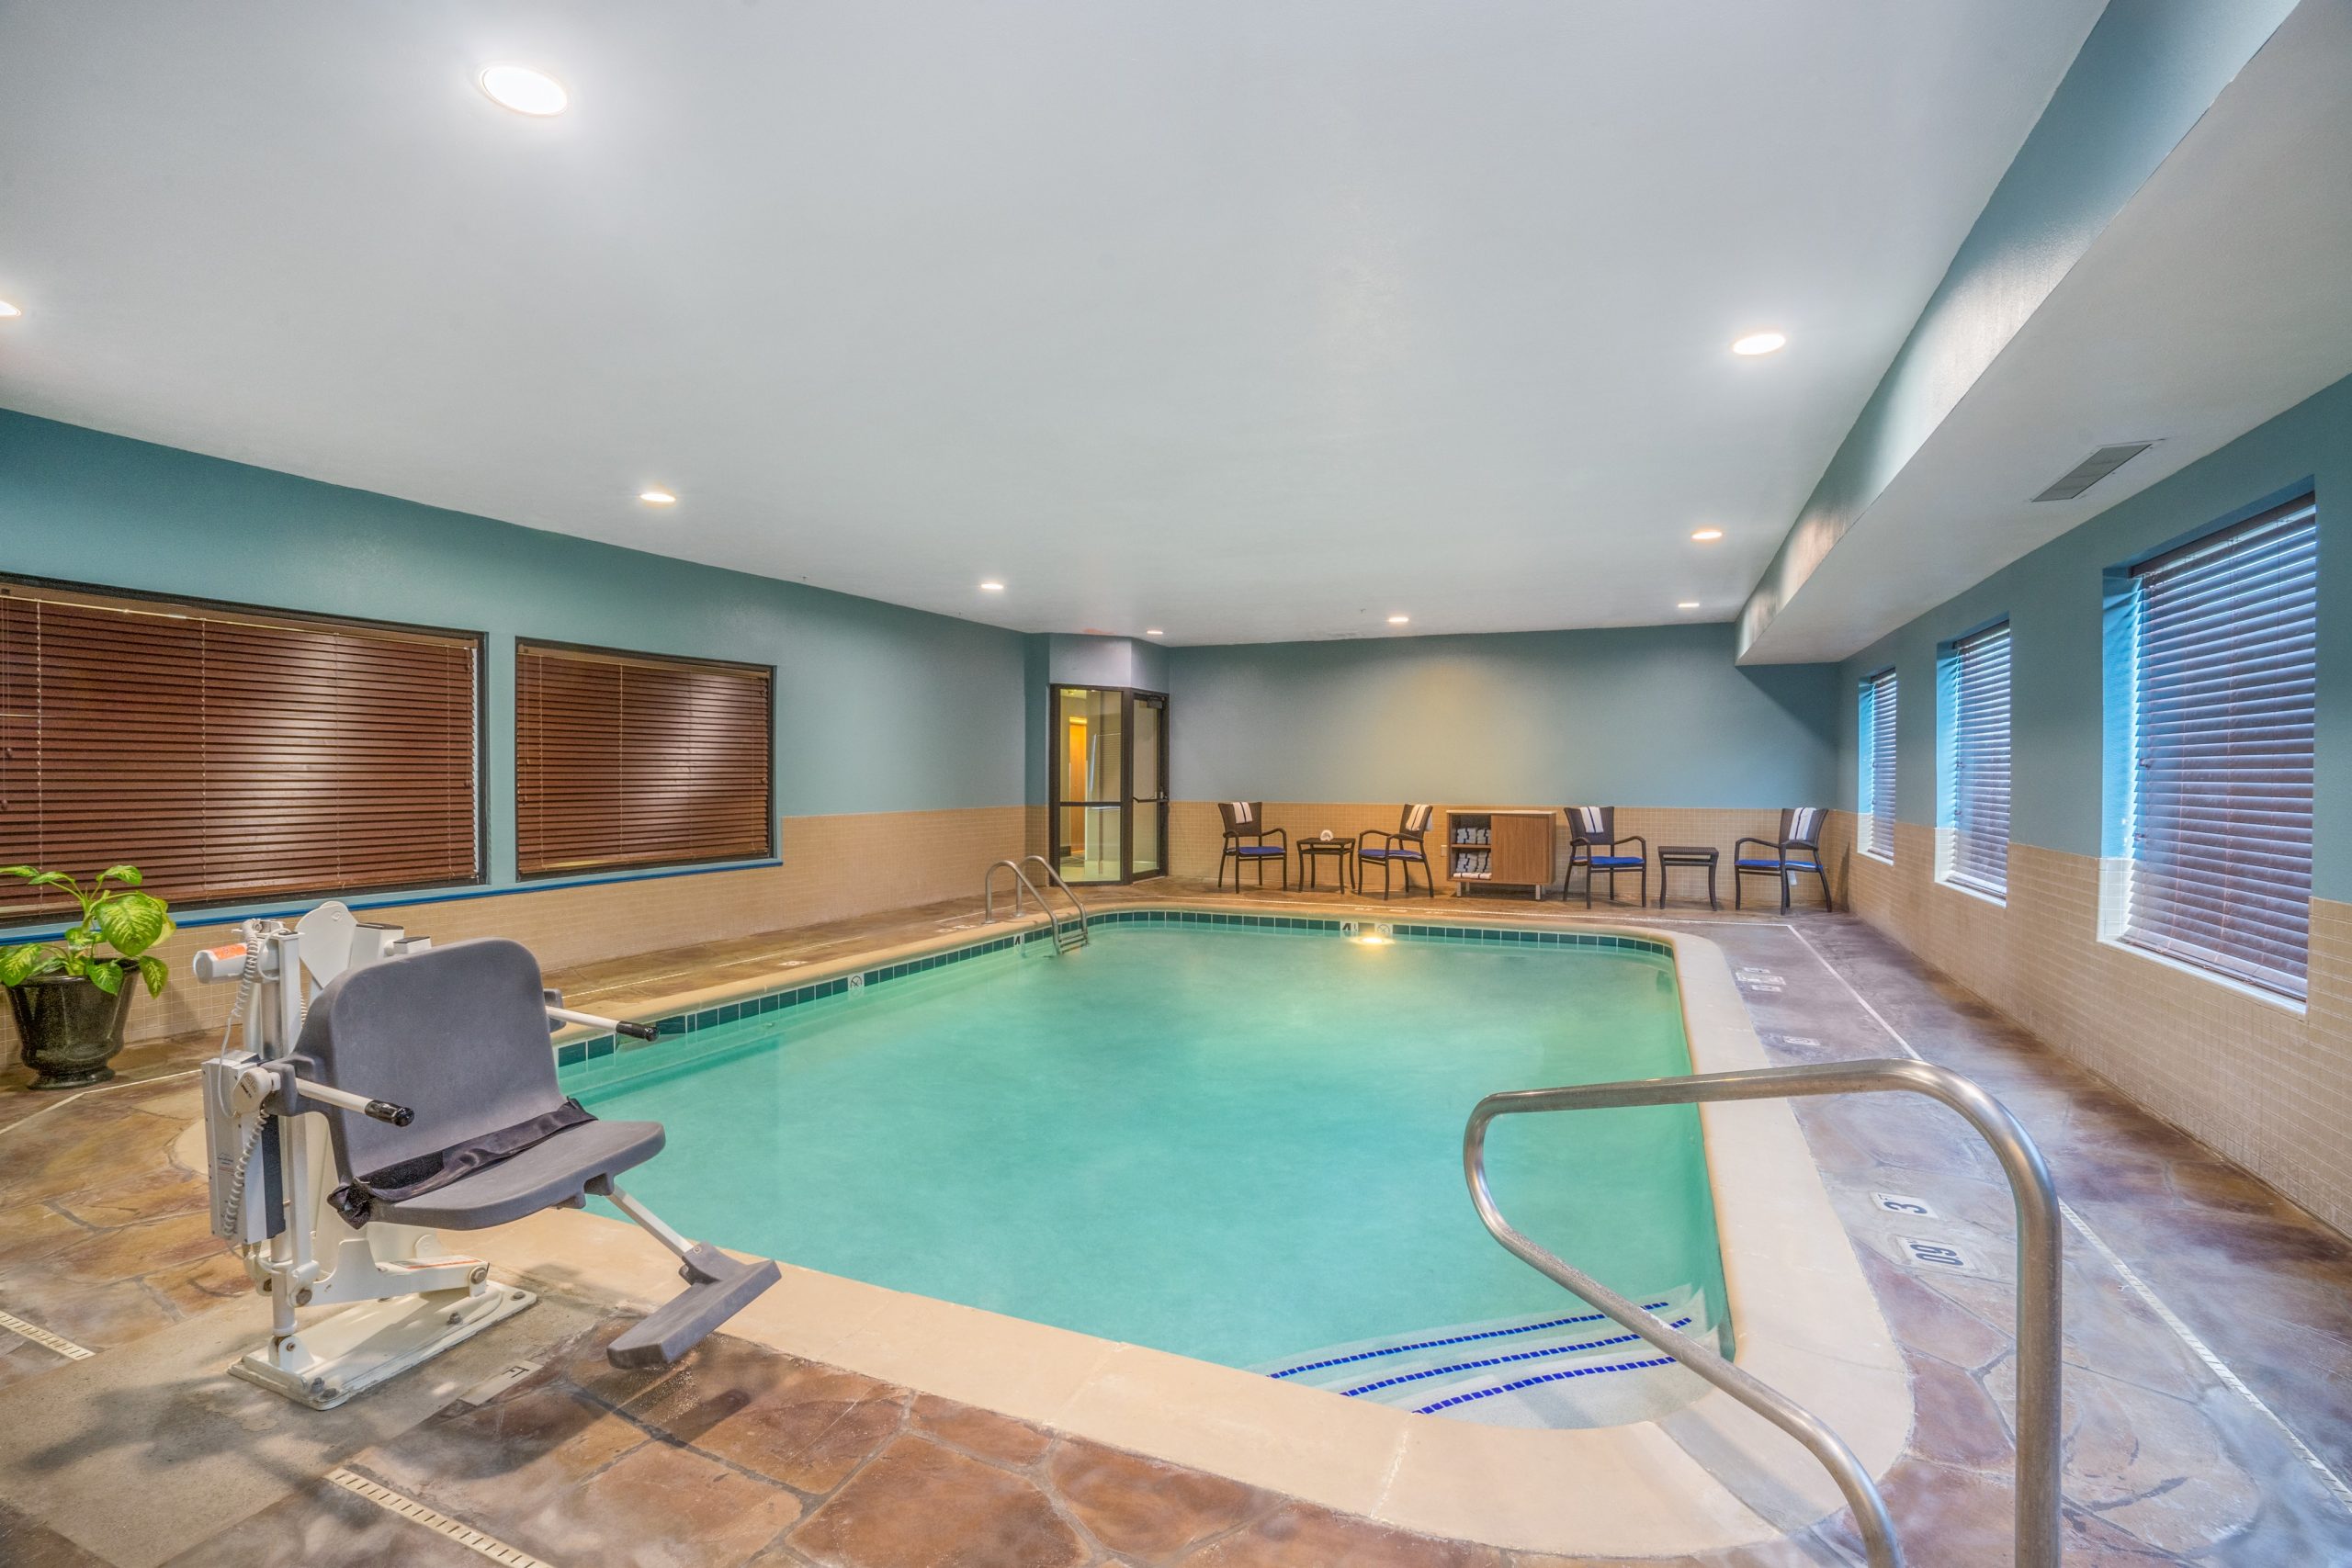 Holiday Inn Express pool